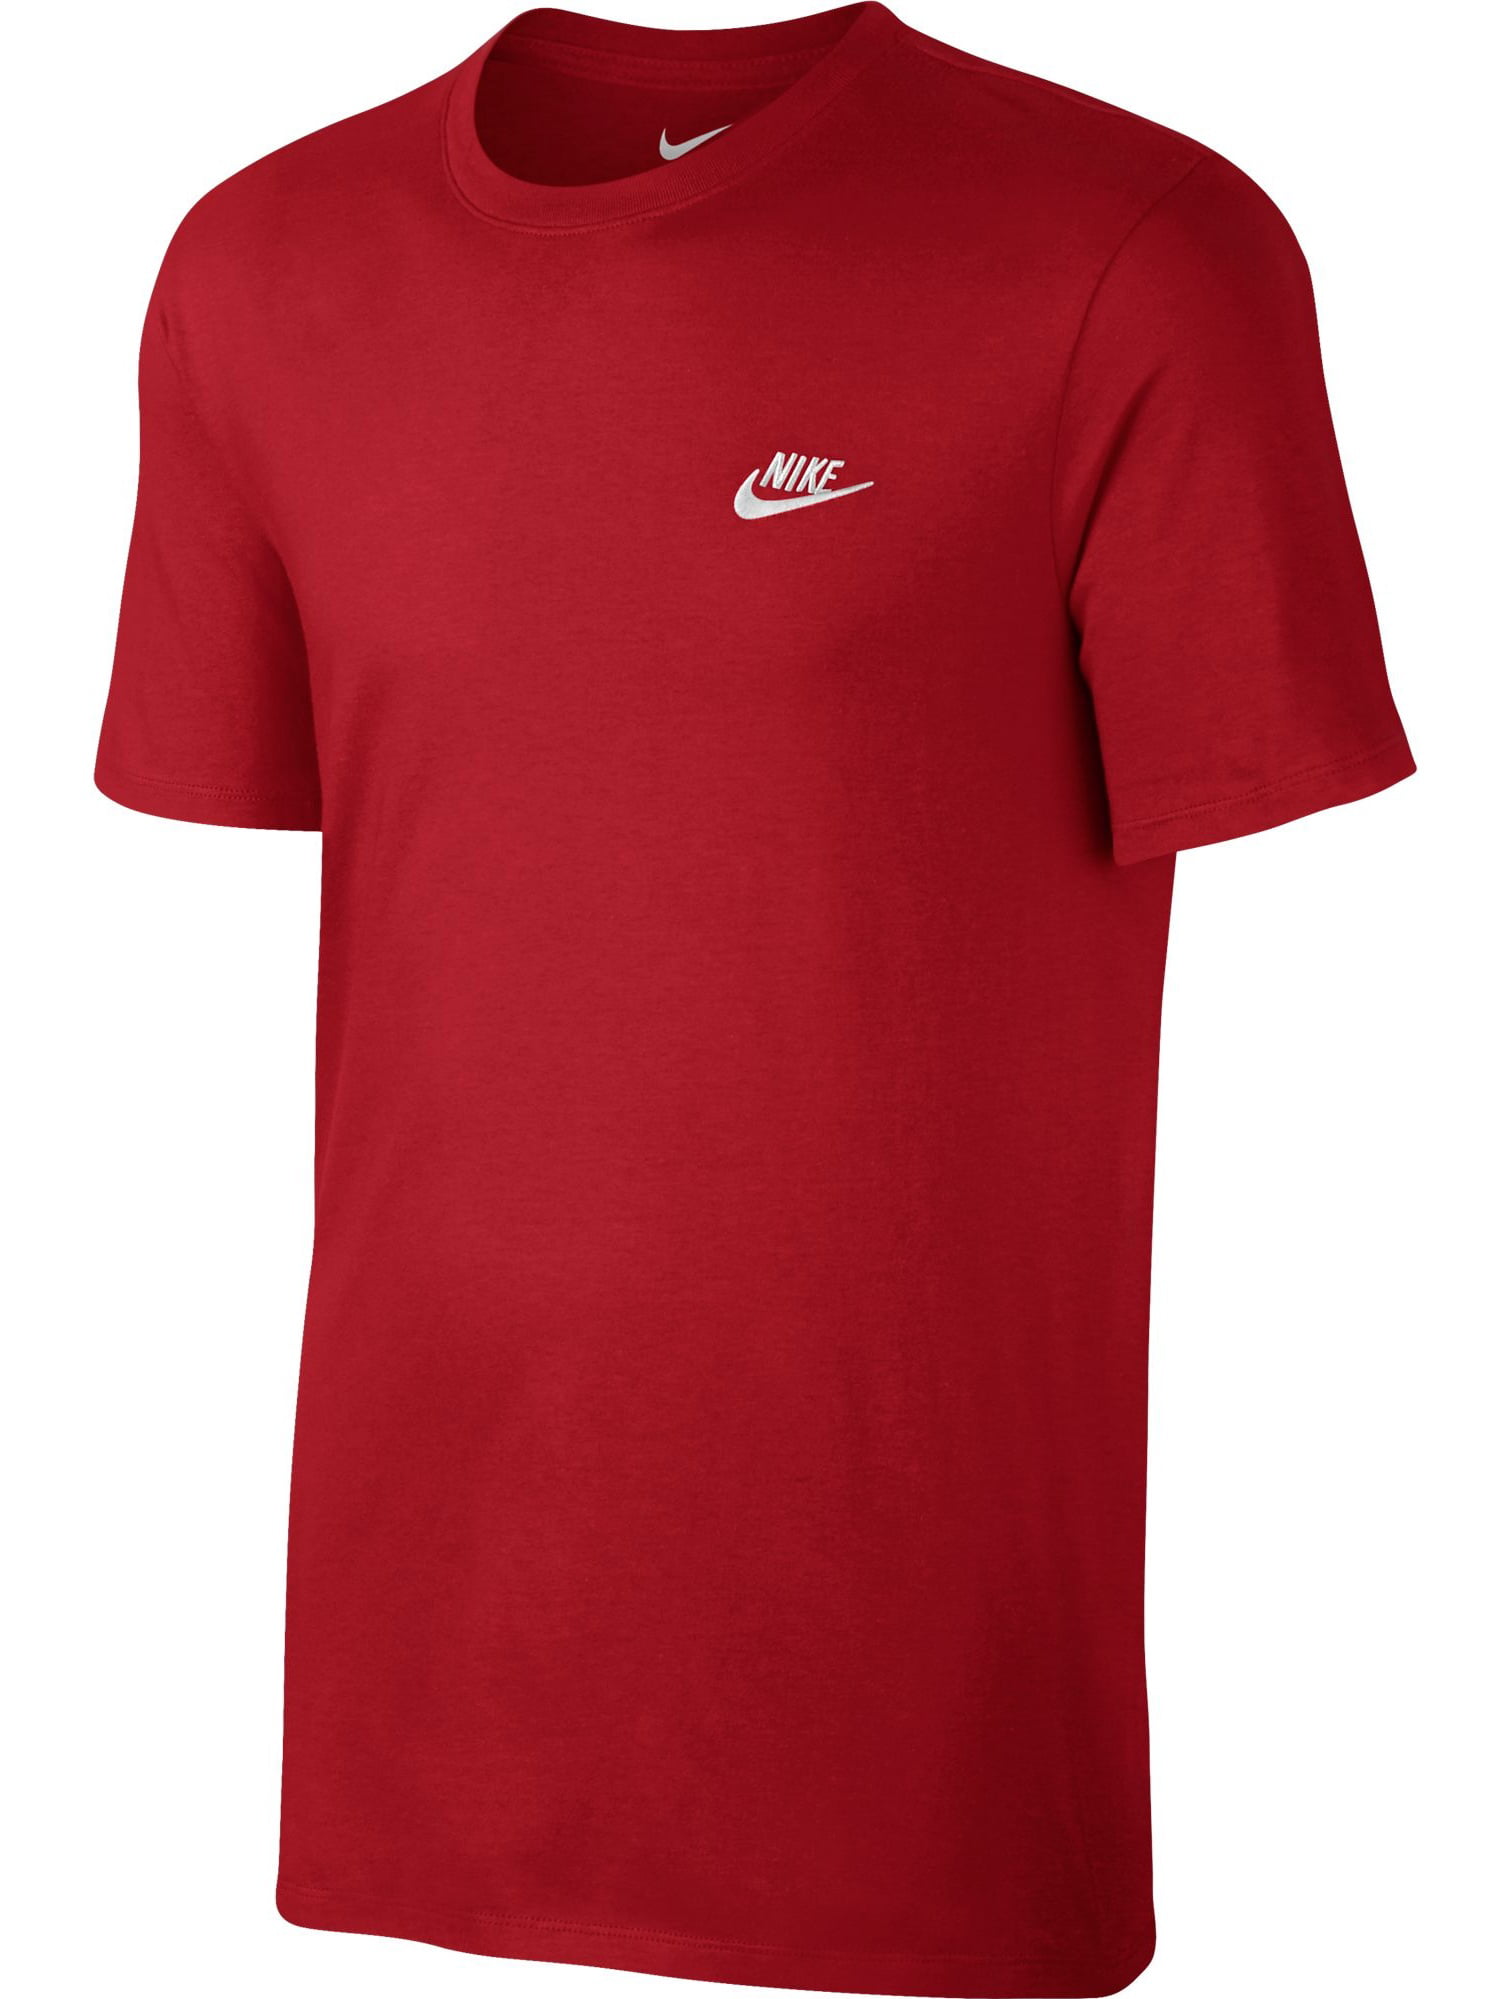 Nike Men's Embroidered Swoosh T-Shirt Red/White 827021-611 - Walmart.com